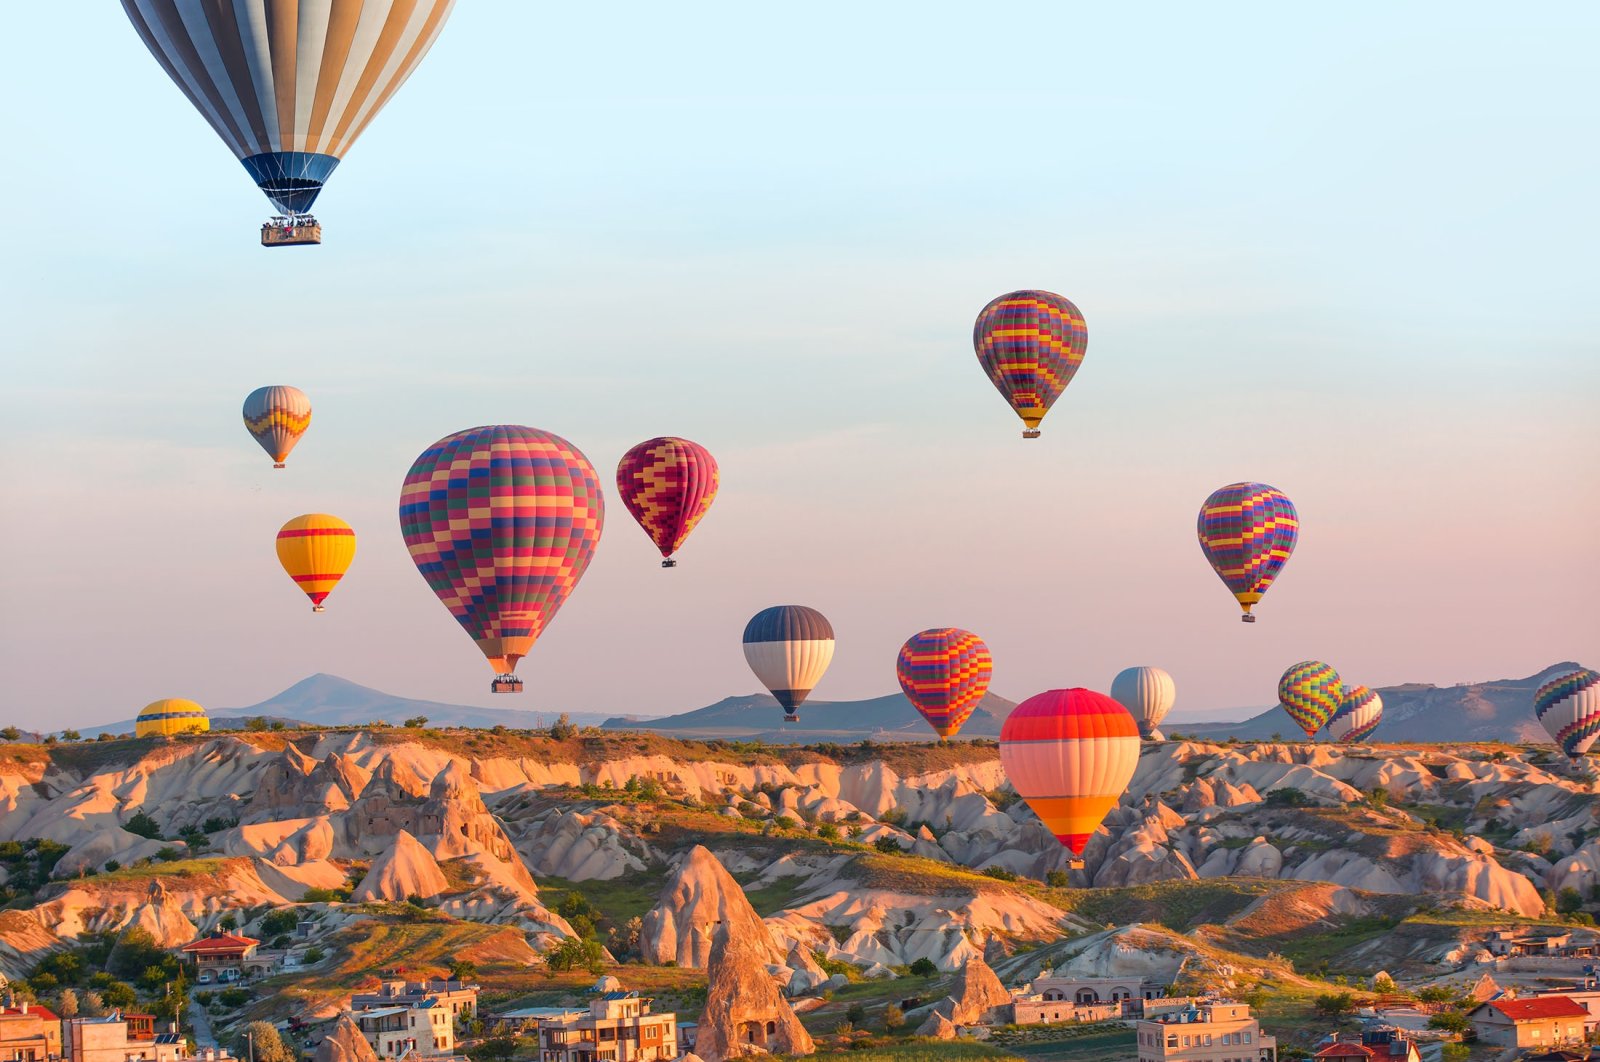 Festival balon udara panas dimulai di Cappadocia yang terkenal di Turki